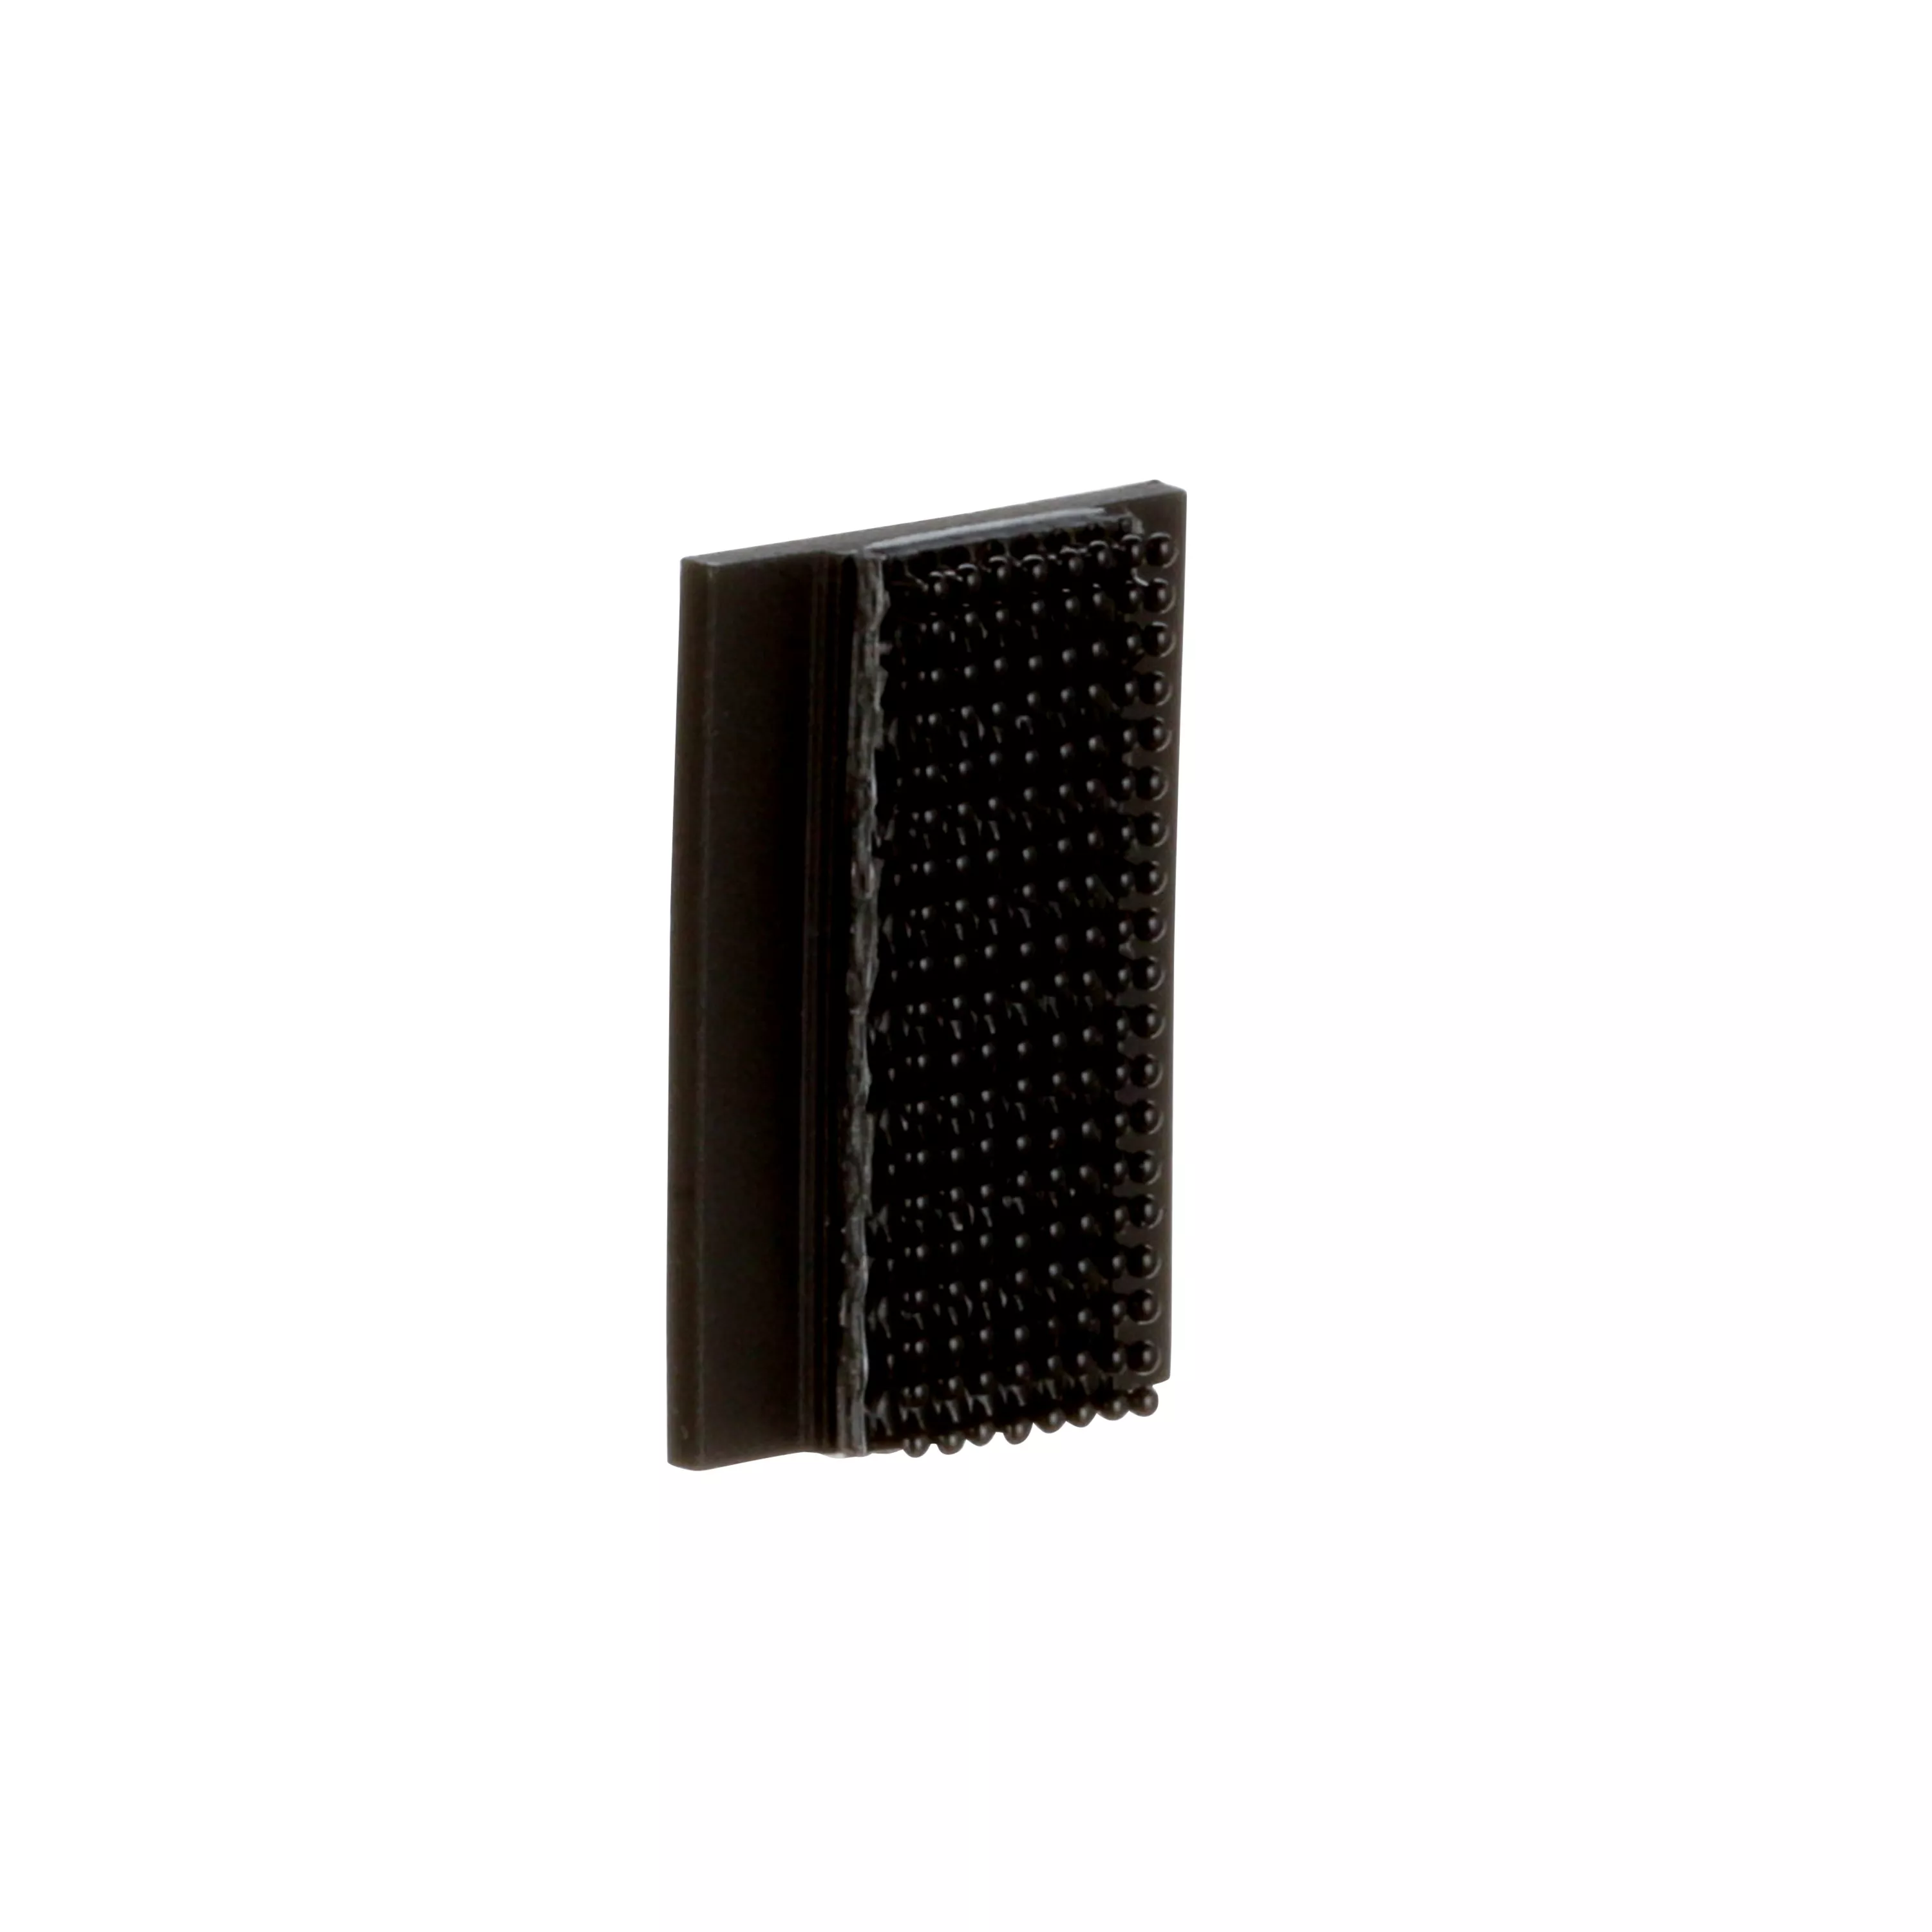 3M™ Dual Lock™ Reclosable Fasteners SJ3290, Slide-in Piece Part, Black,
Stem Density 400, 18 mm x 25.4 mm, 5000 Each/Case